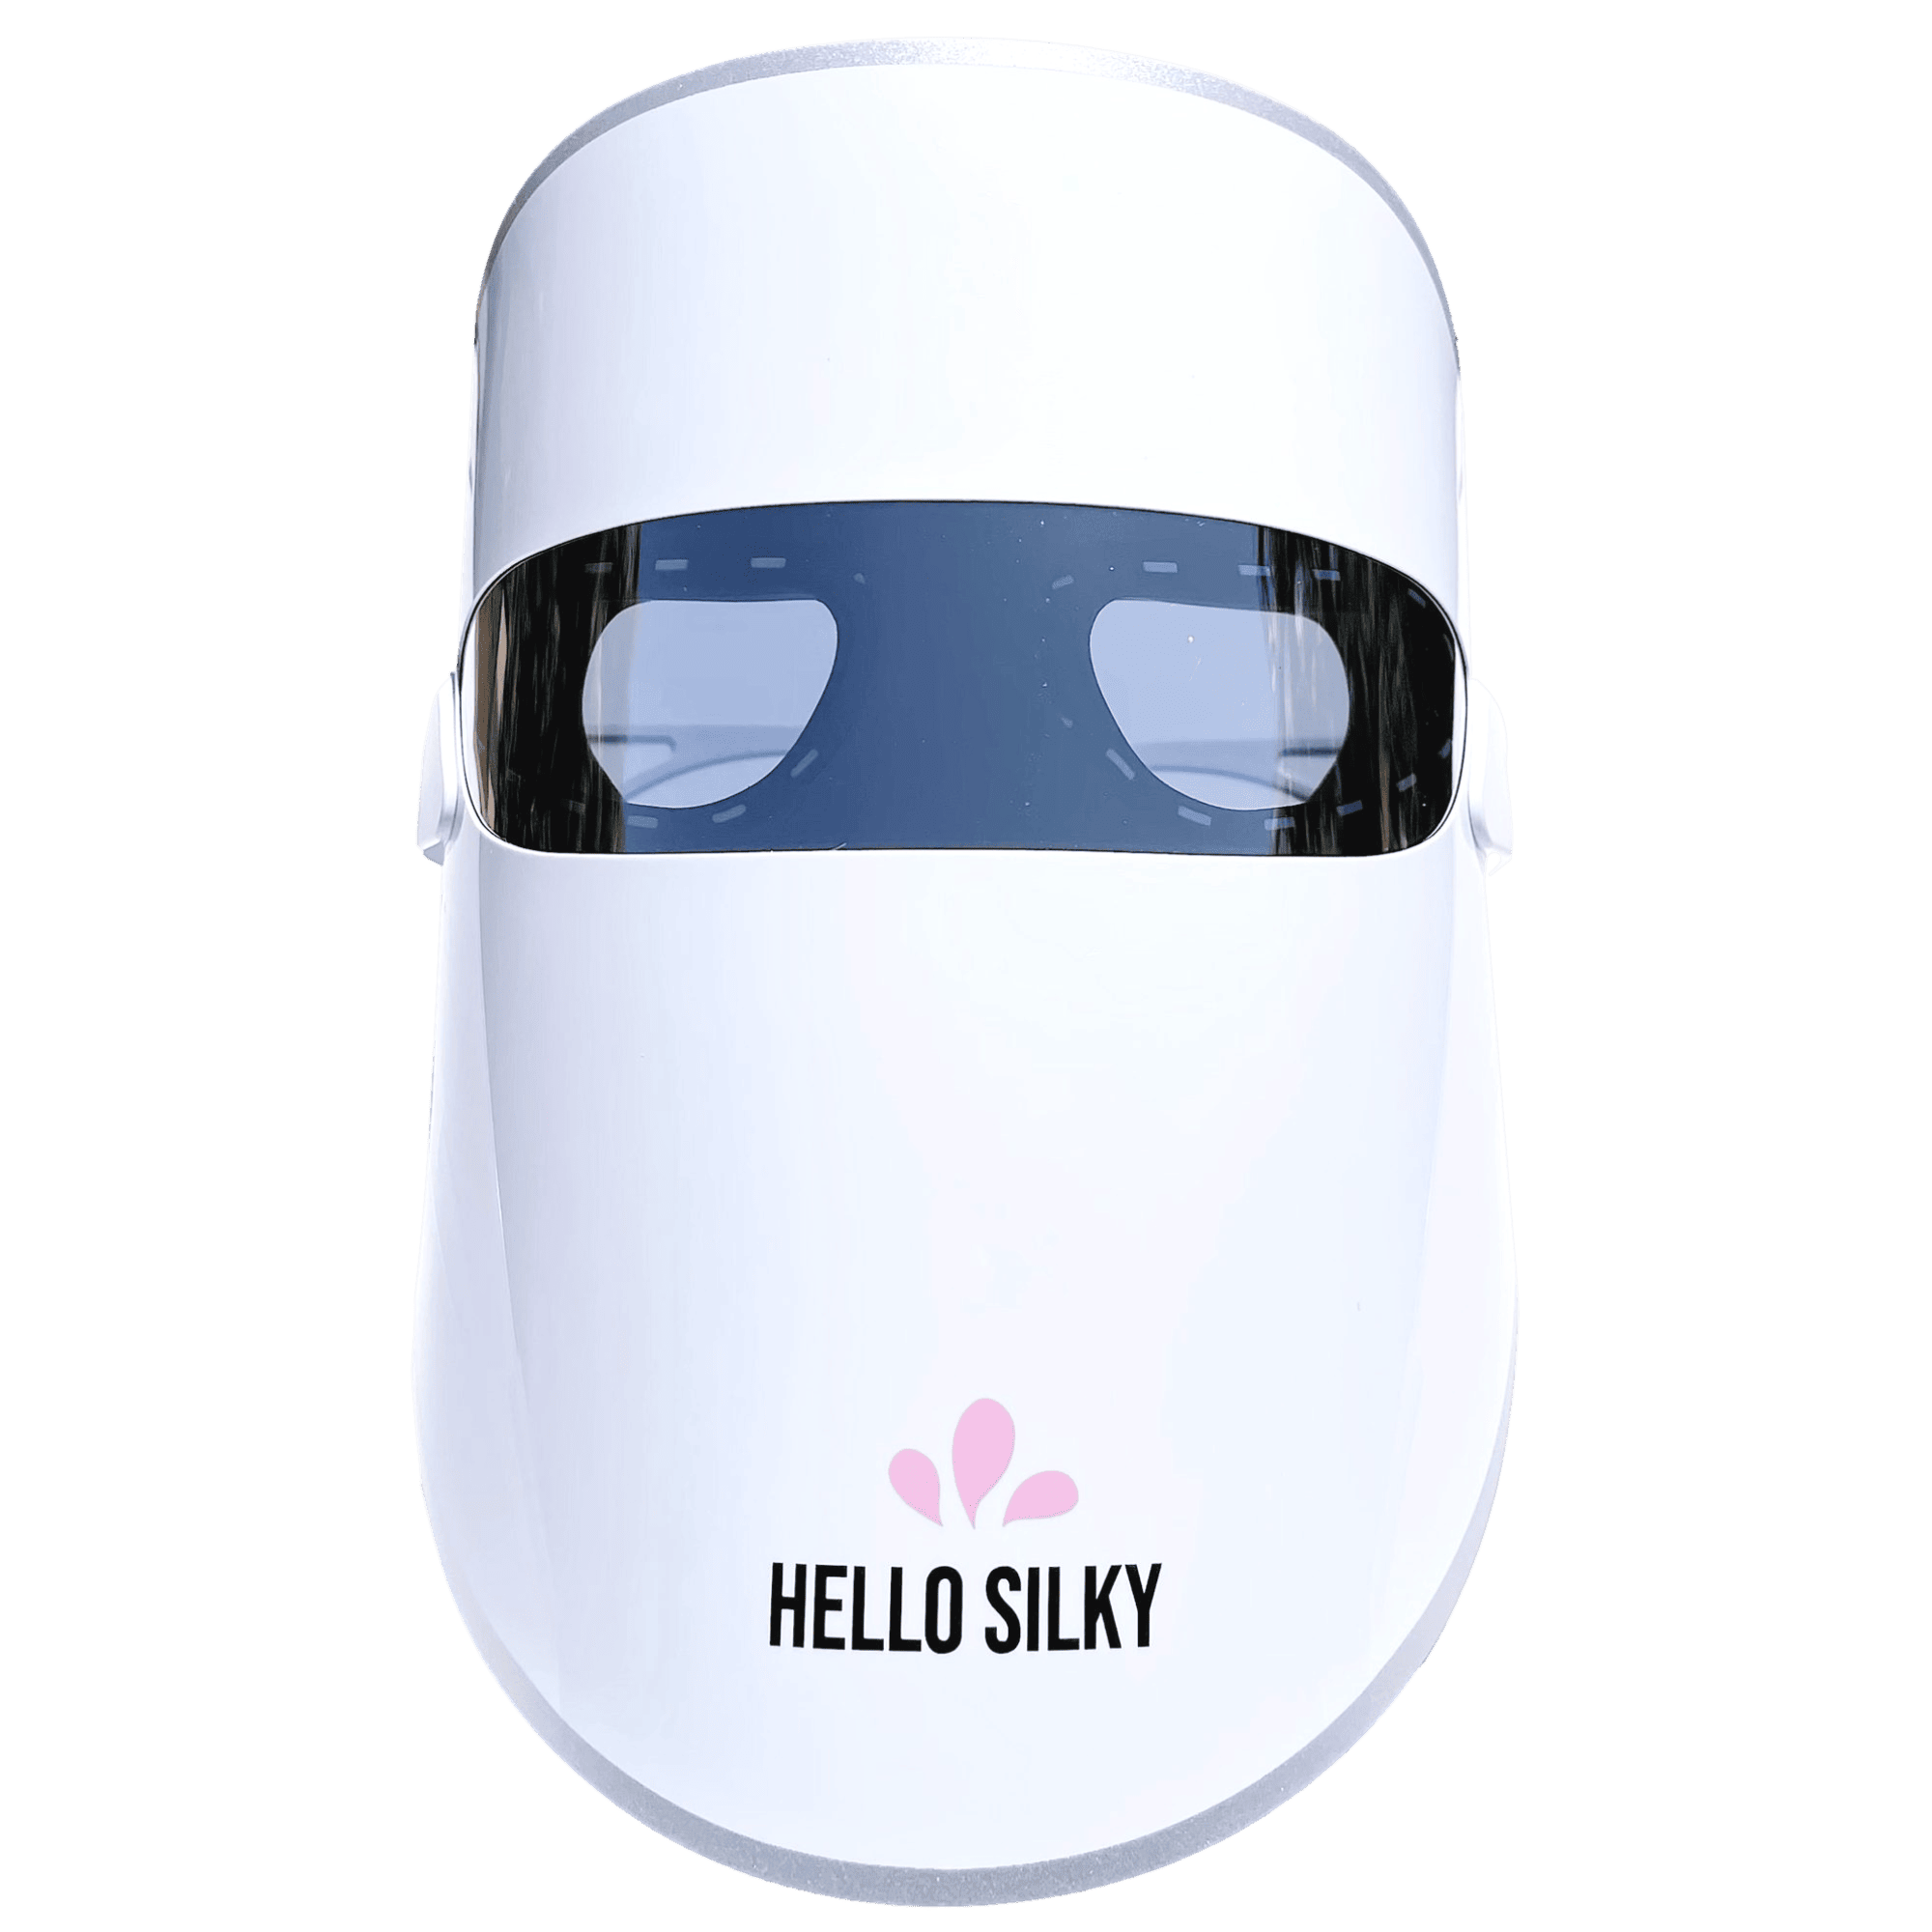 Hello Silky LED light therapy mask Australia